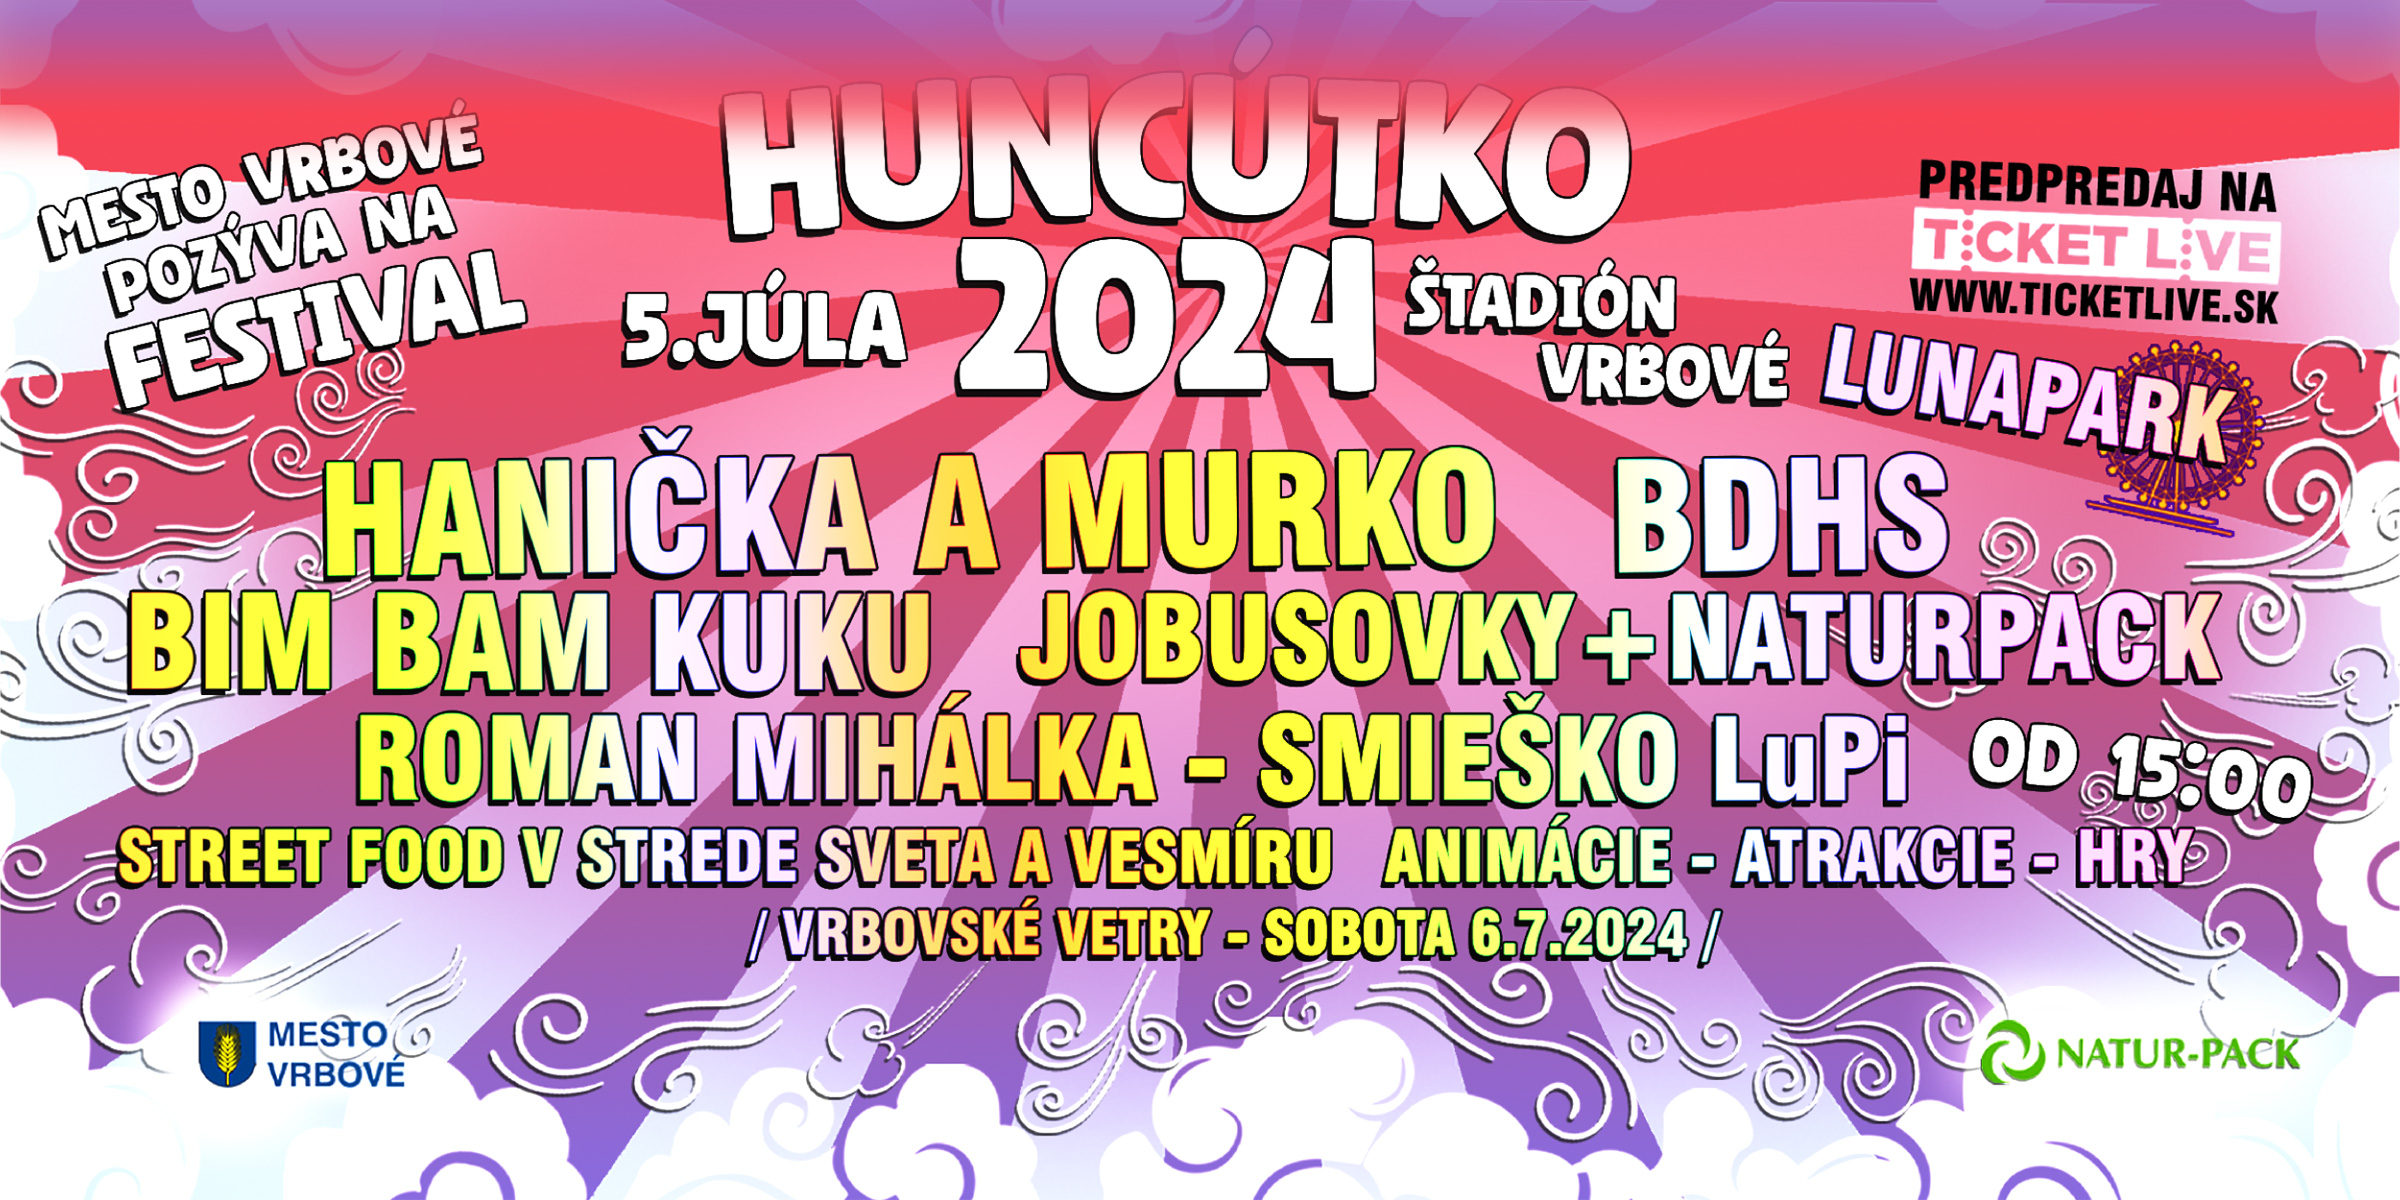 huncutko1-2024